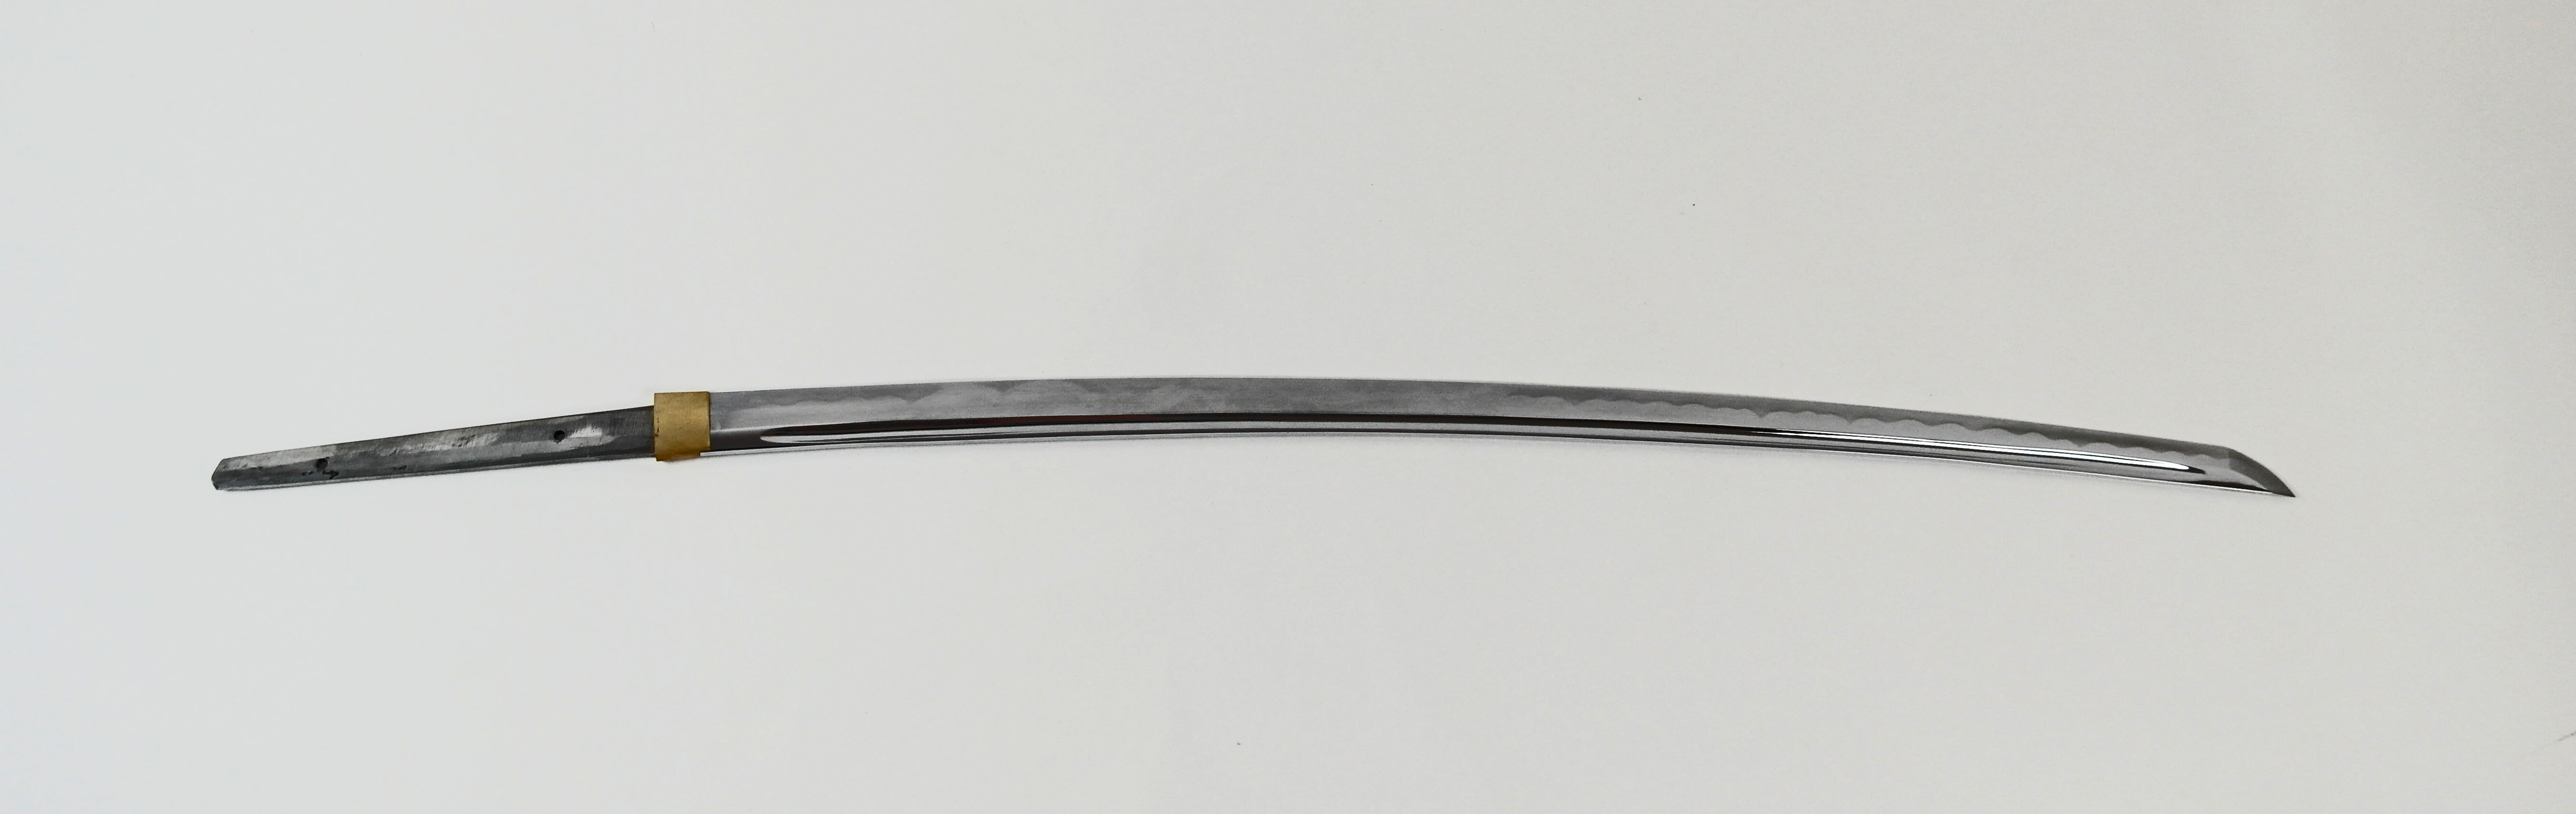 Japanese iaito blade